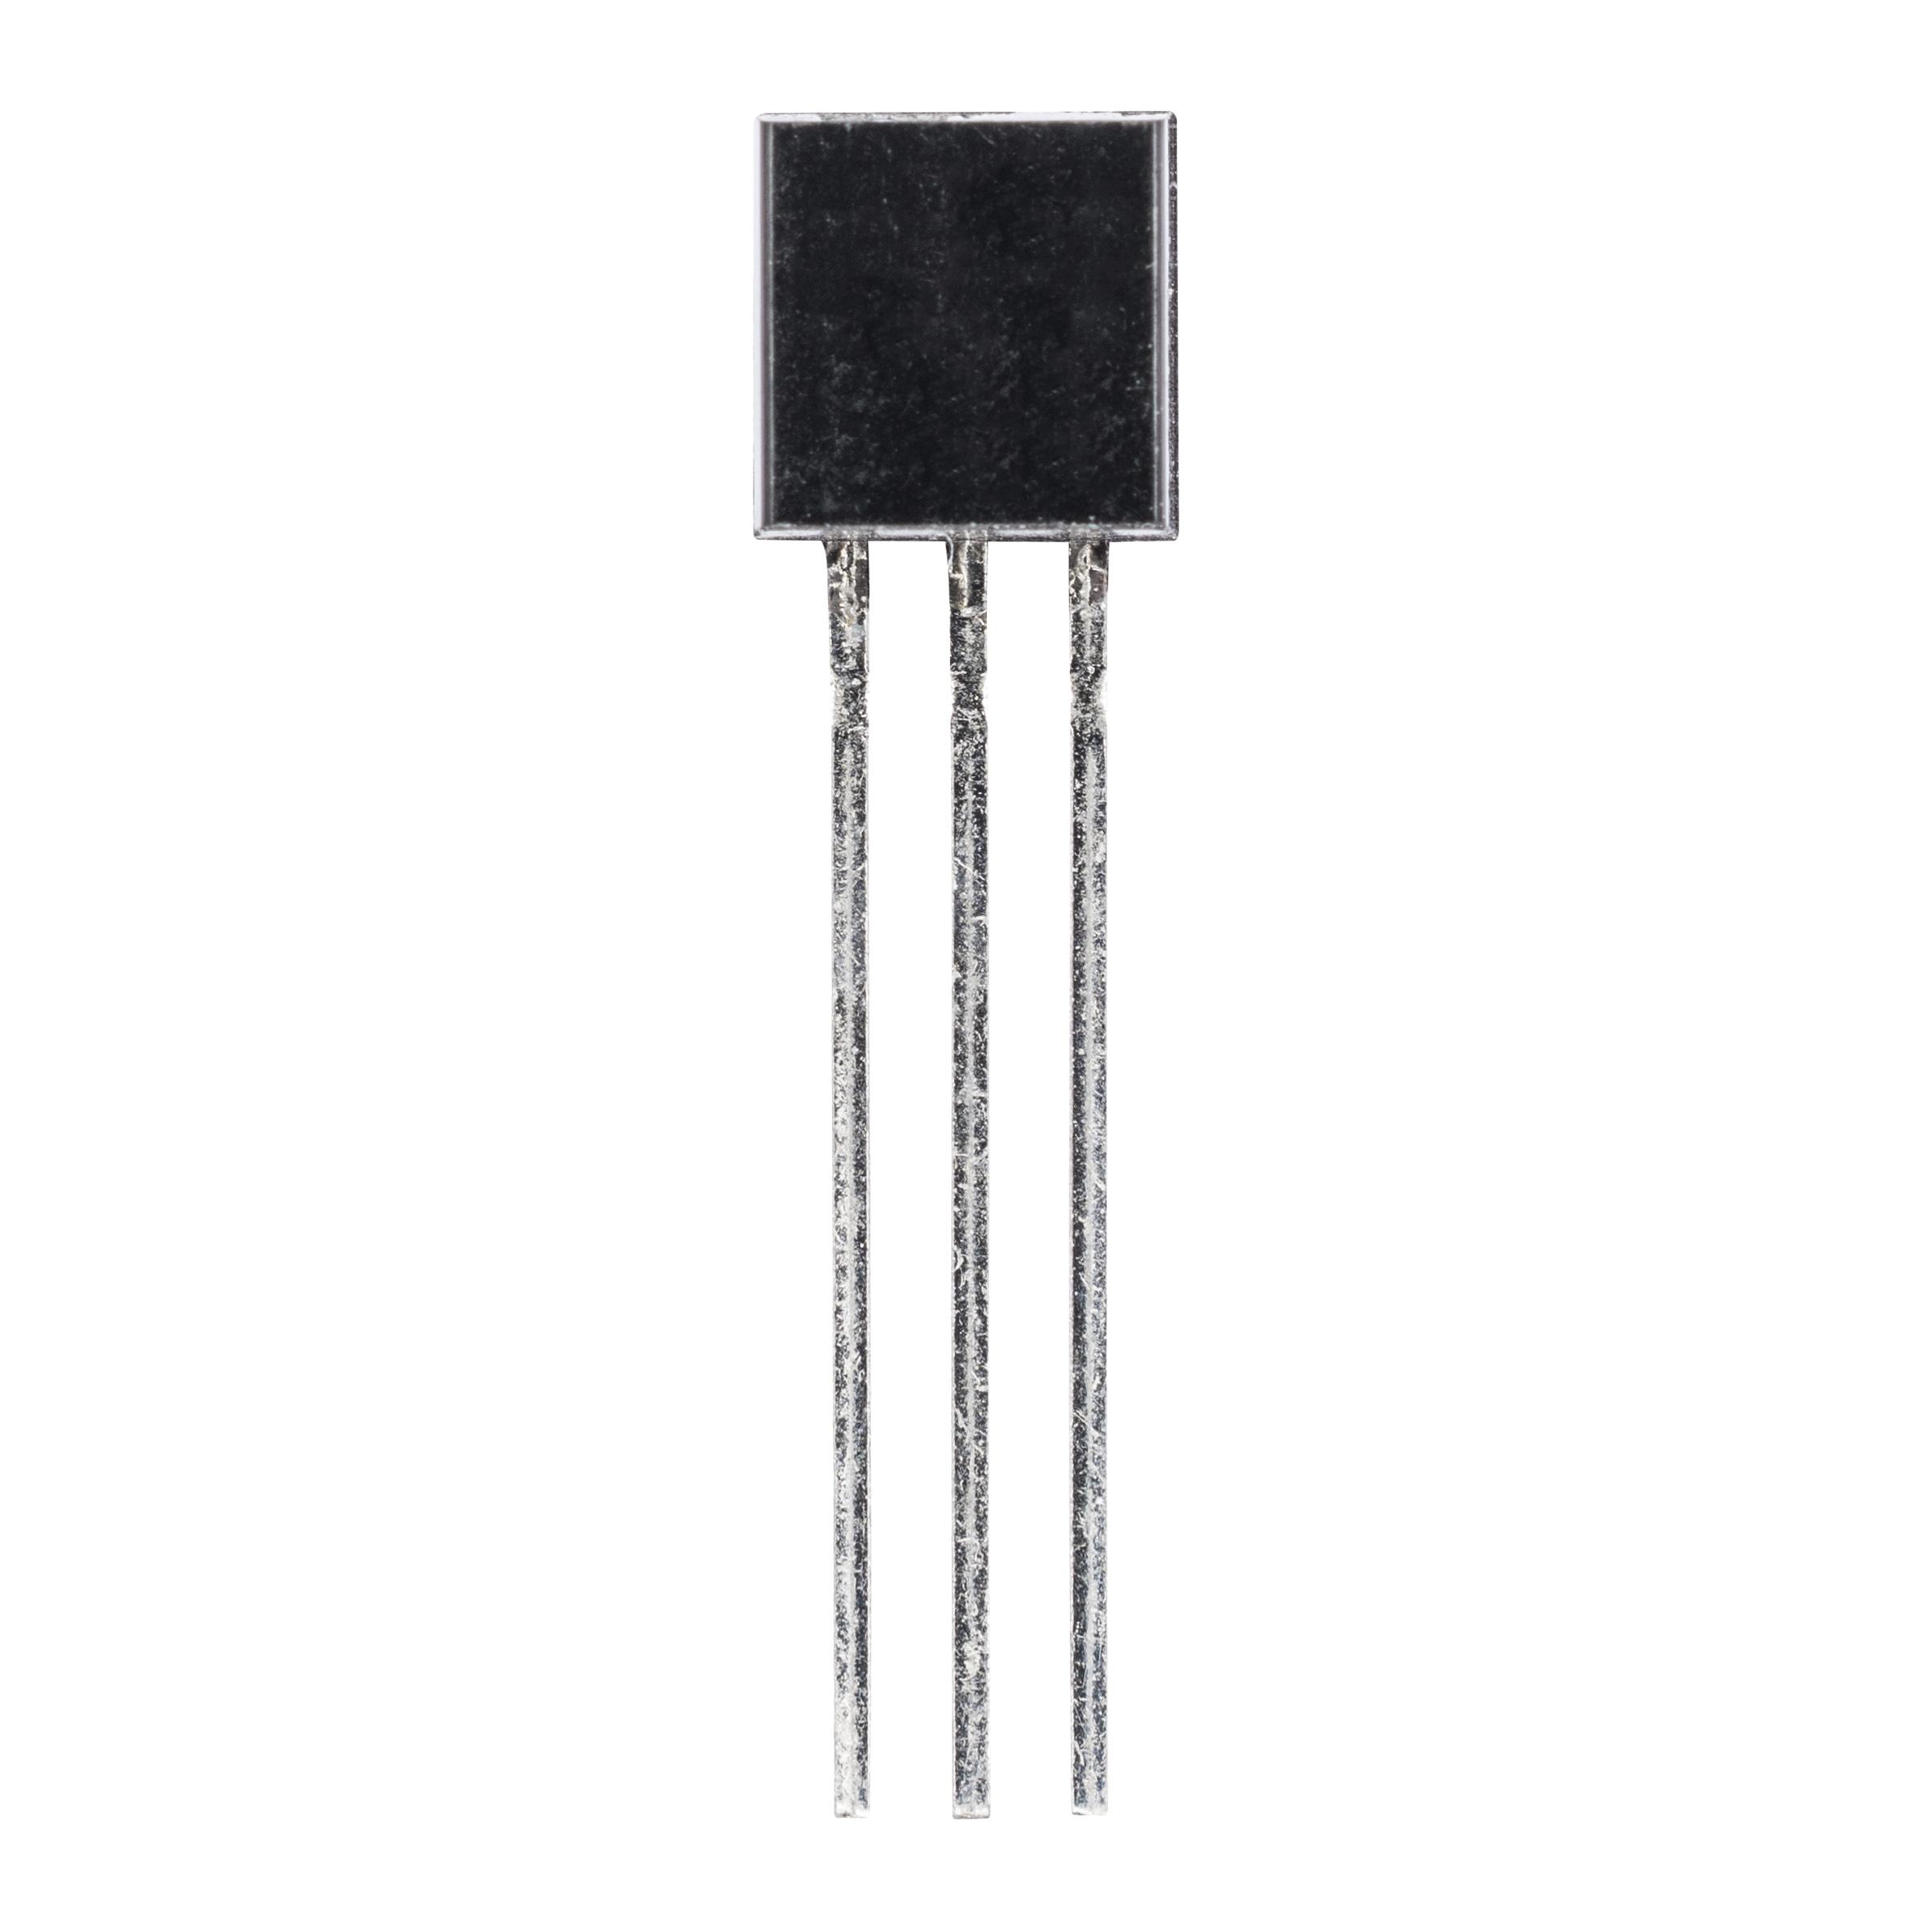 2N3904 (Bipolartransistor NPN)